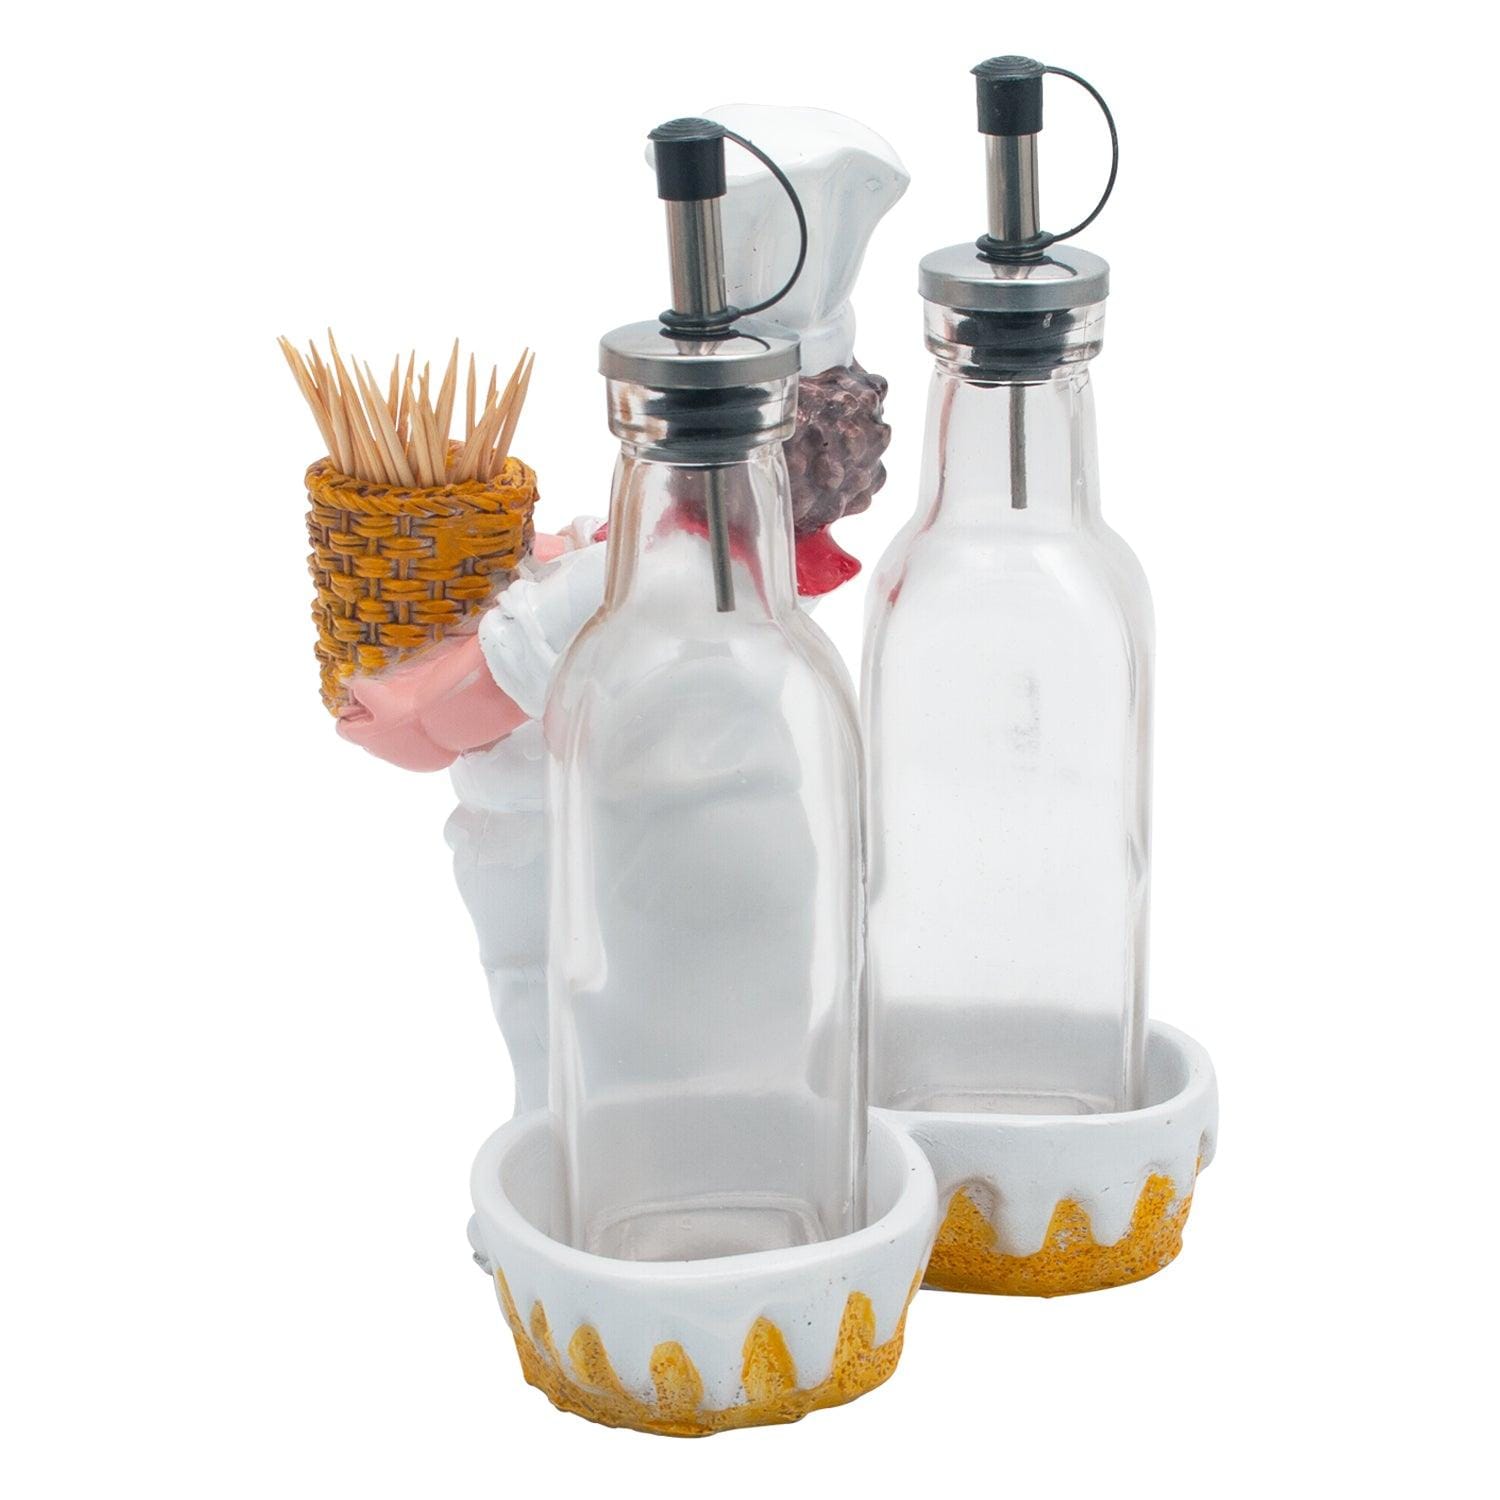 Foodie Chef Figurine Resin Oil & Vinegar Bottles with Toothpick Holder Set (Left)